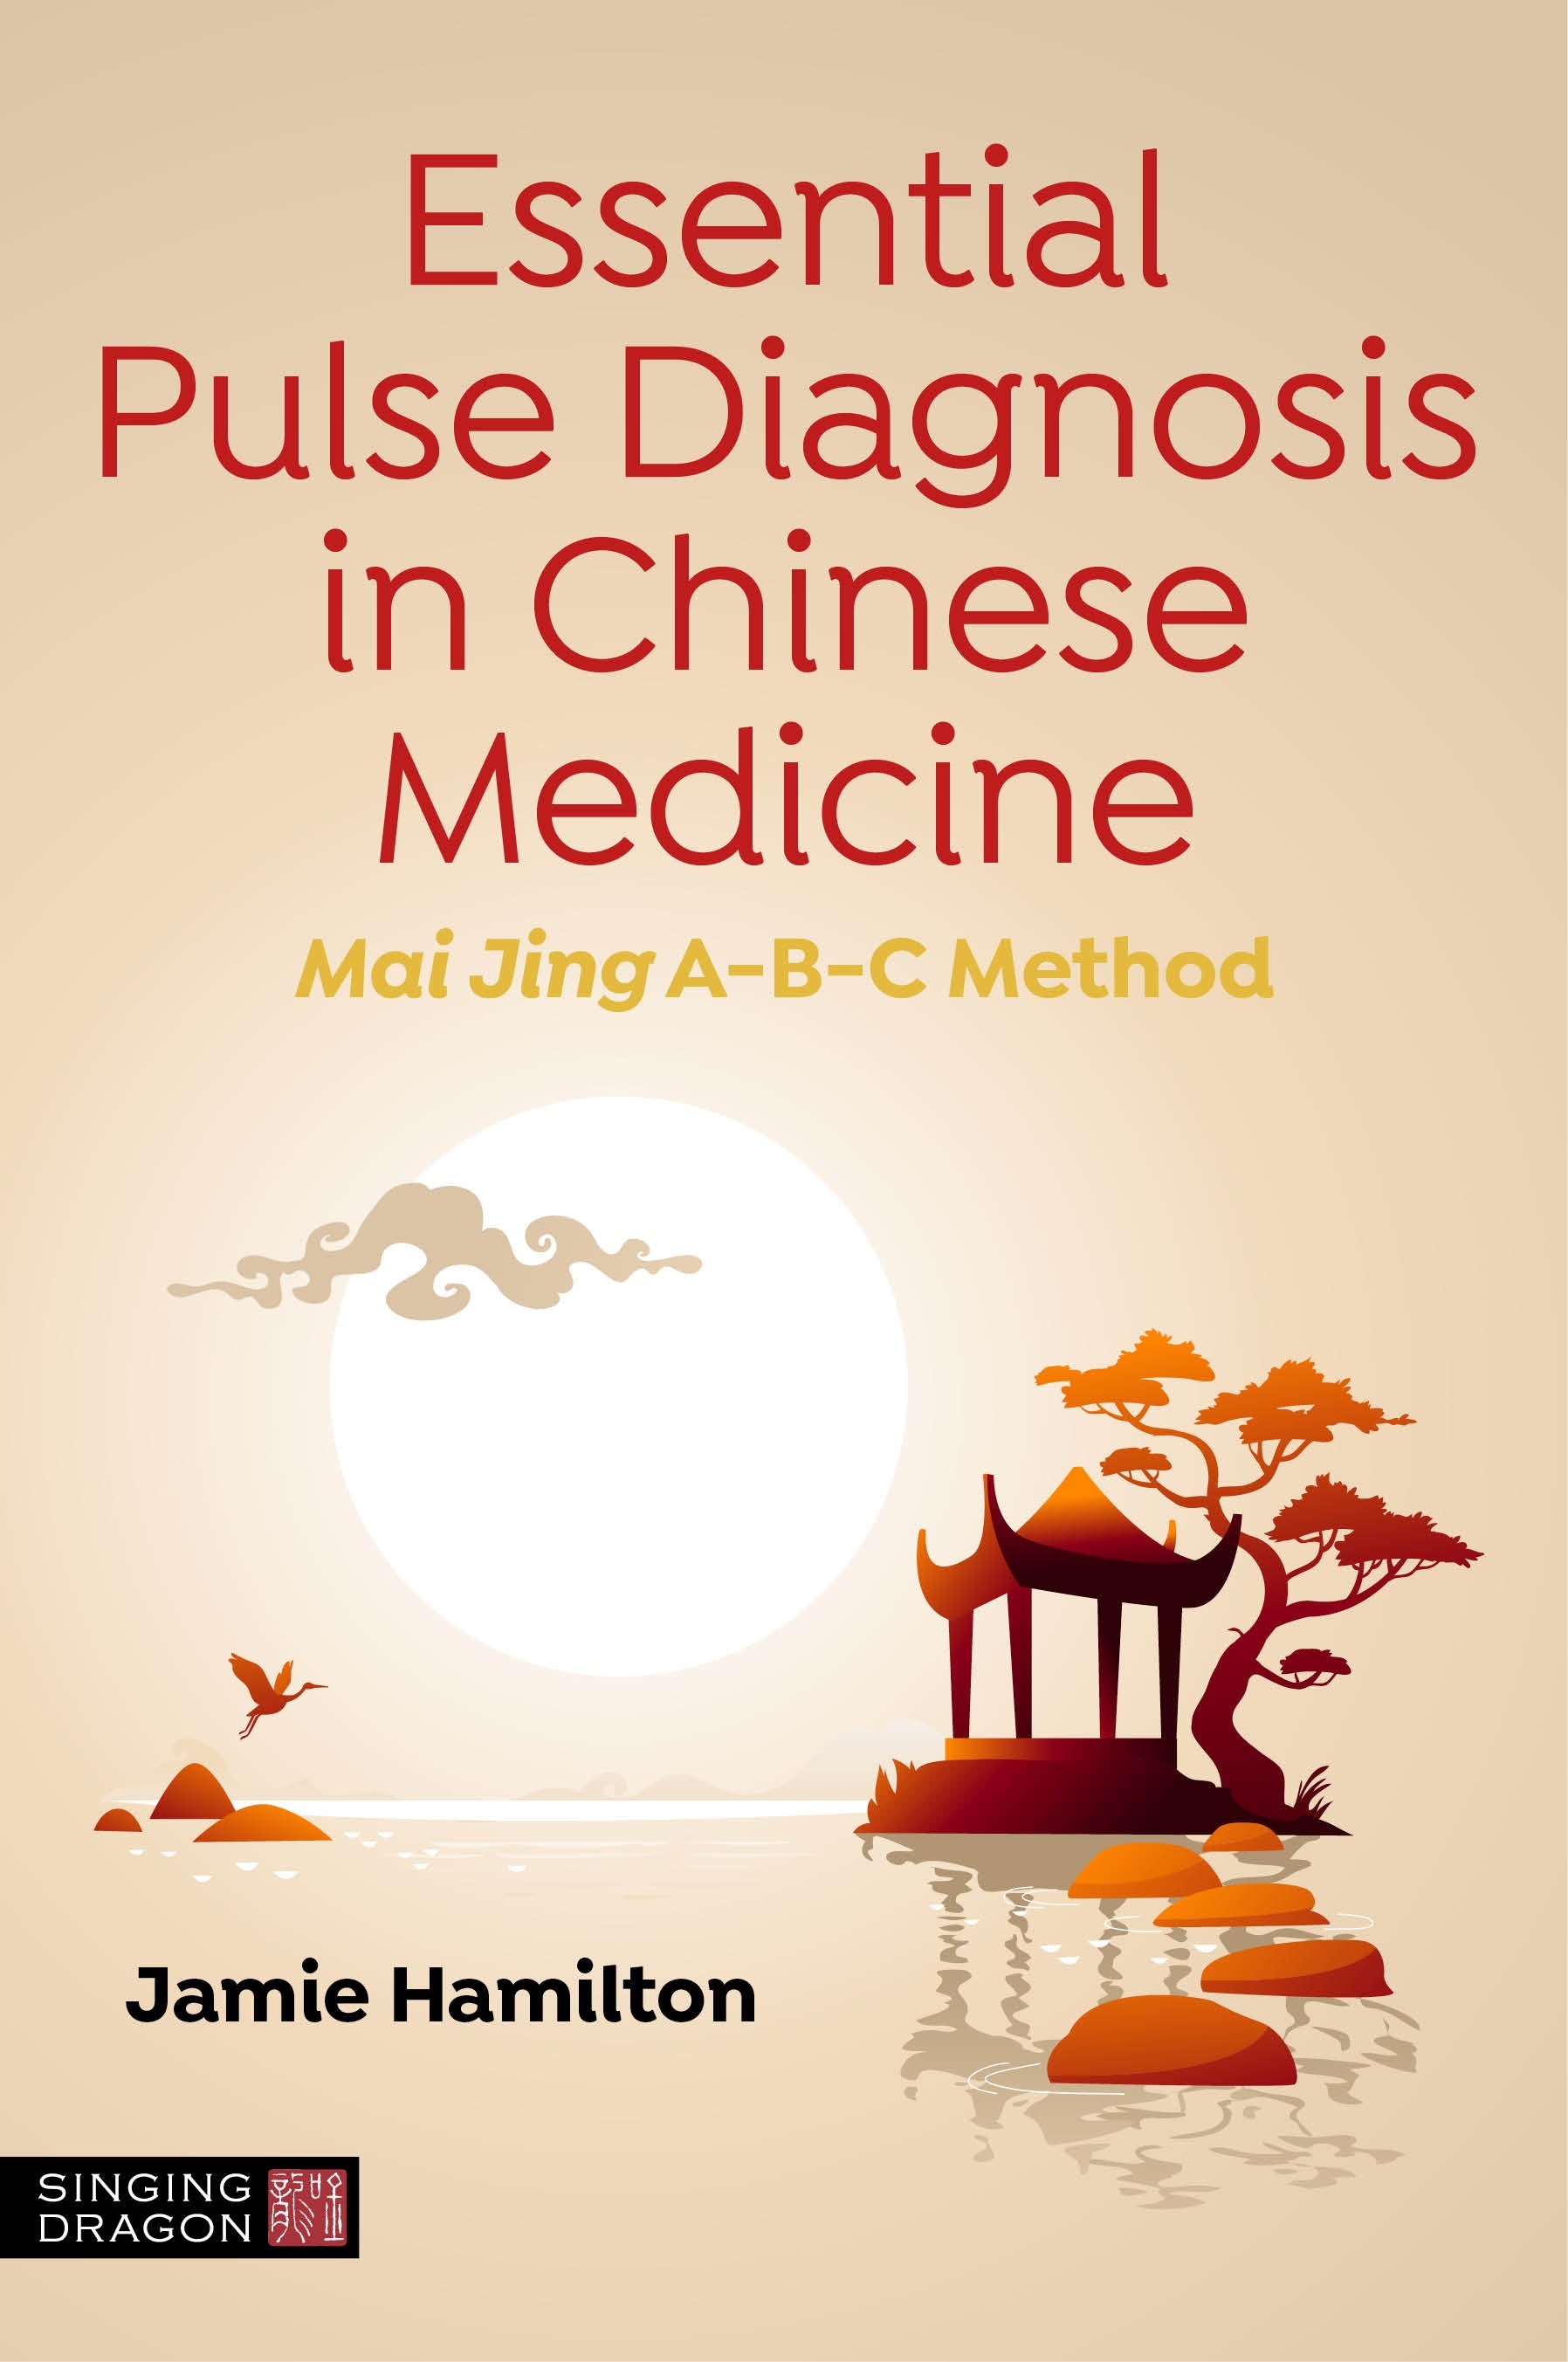 Essential Pulse Diagnosis in Chinese Medicine by Jamie Hamilton